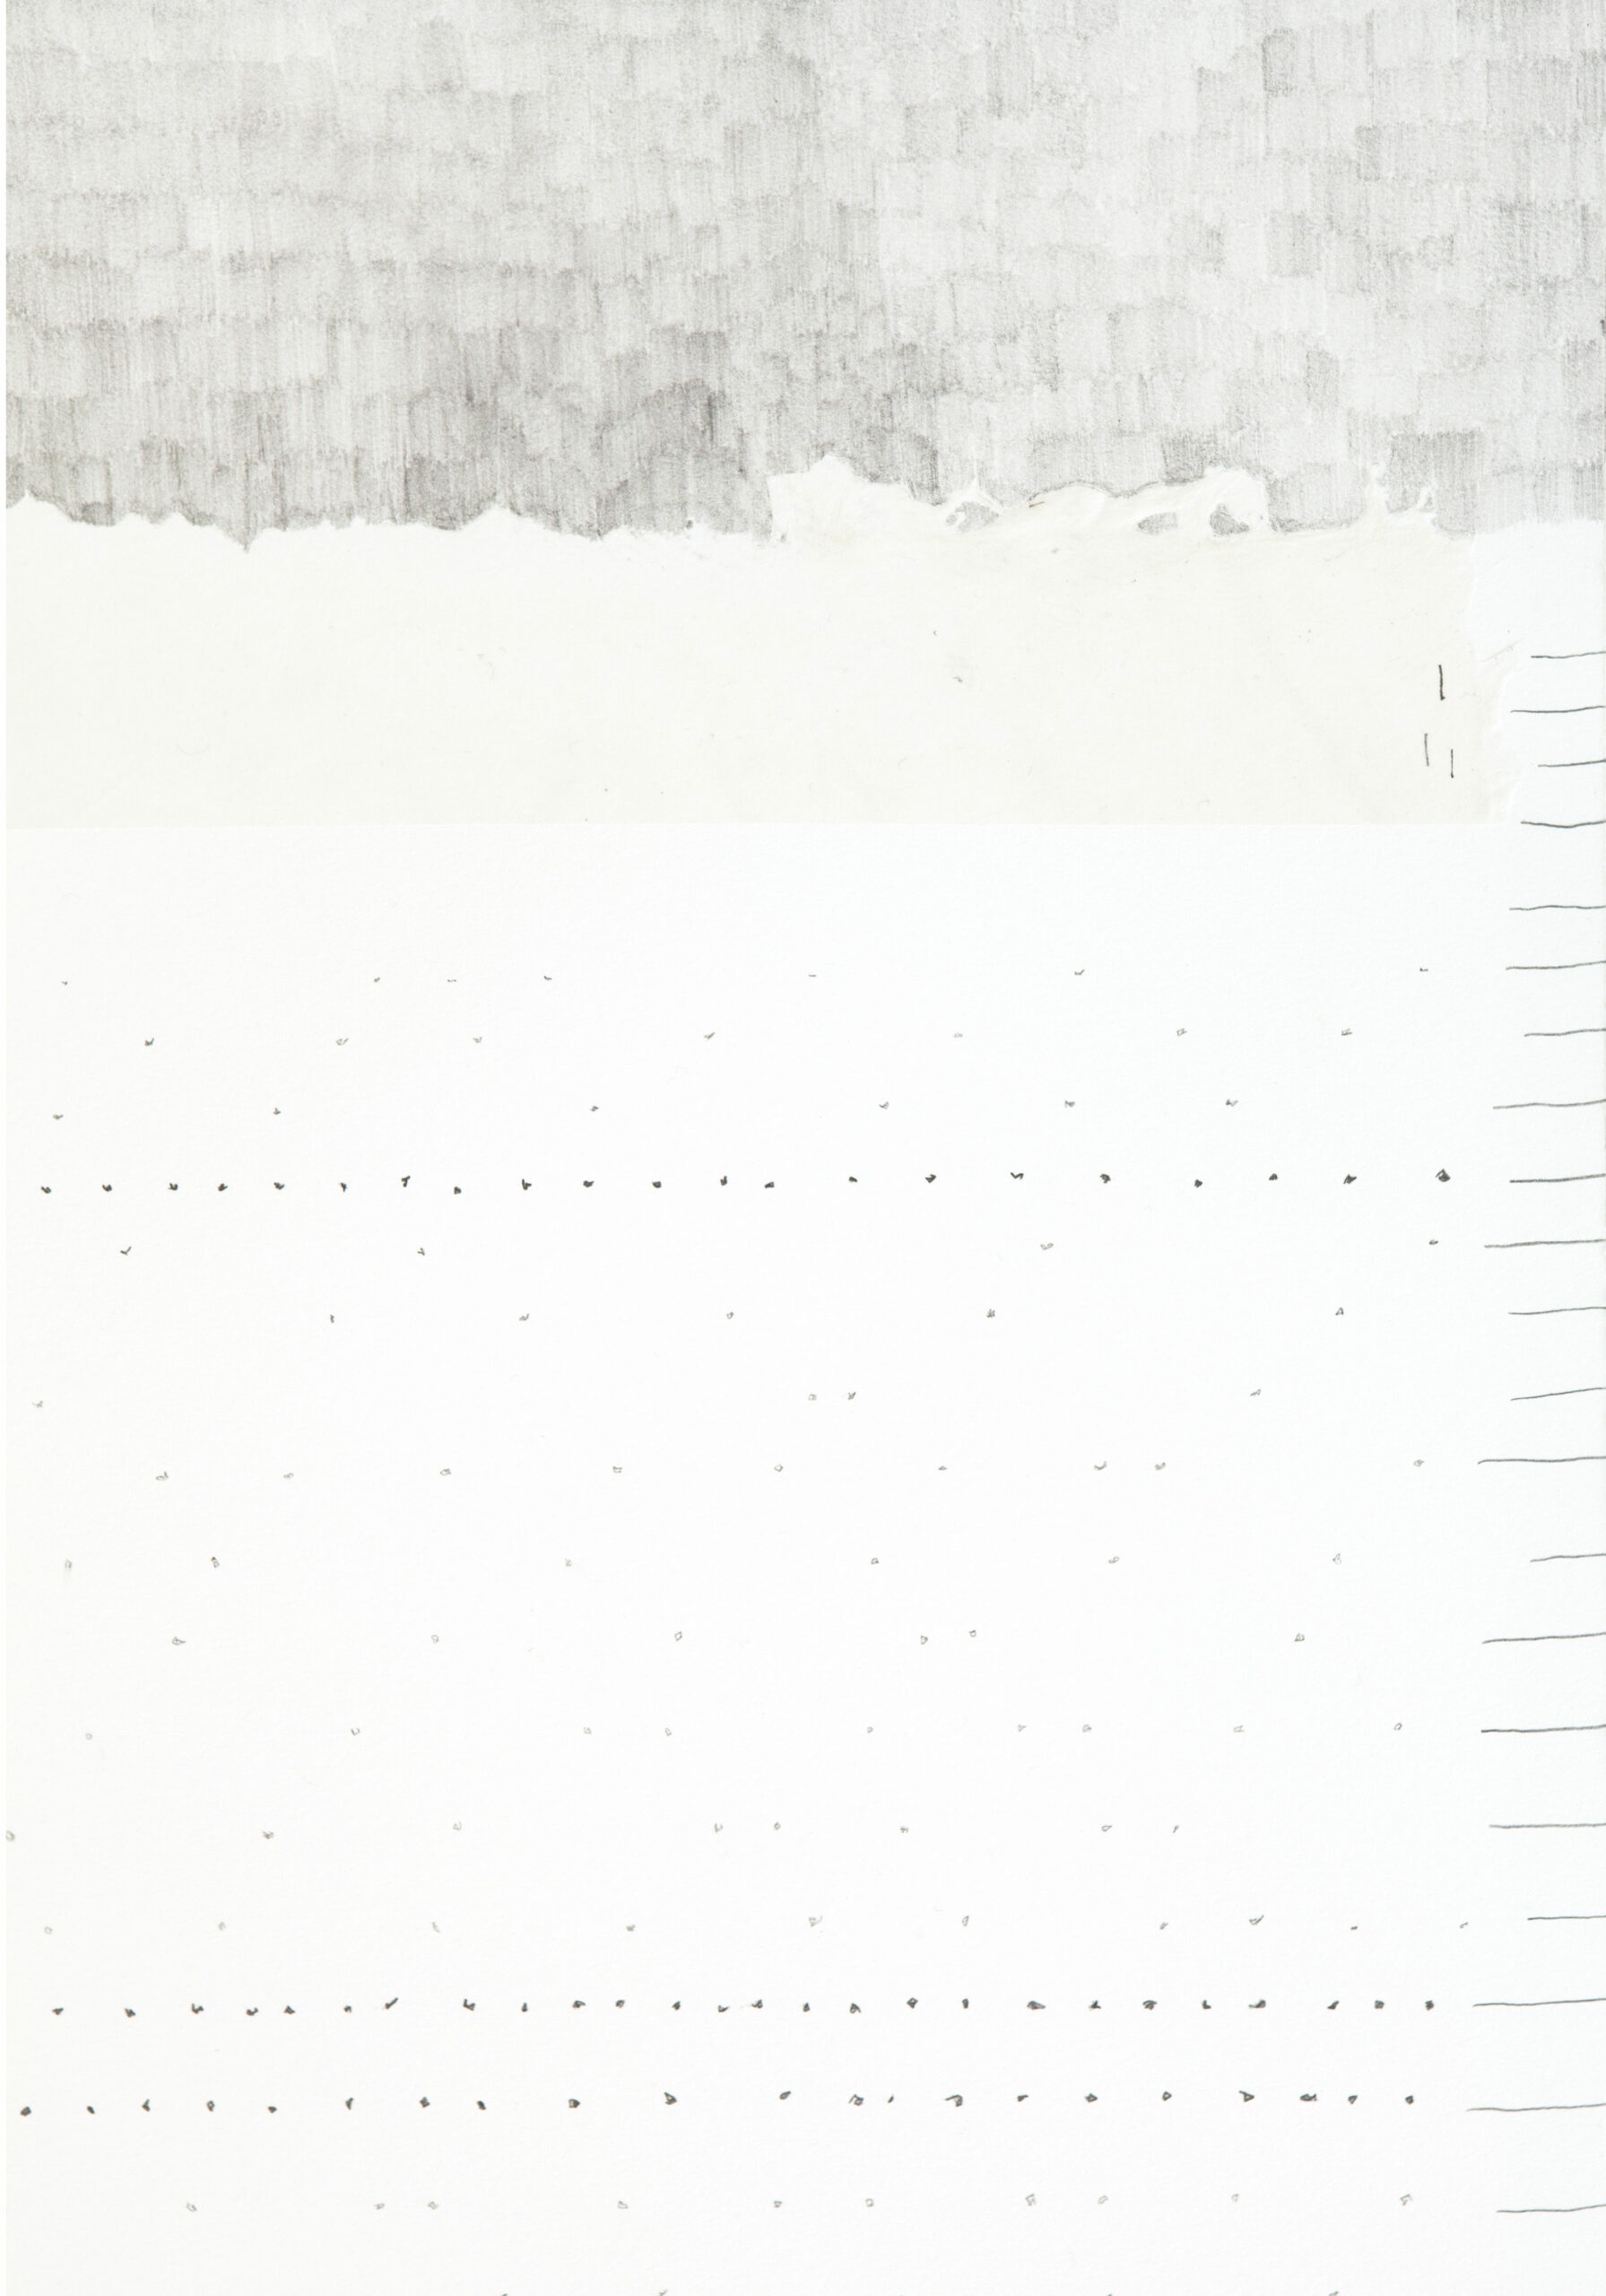 Miriam Salamander, Drawing of dots on white paper